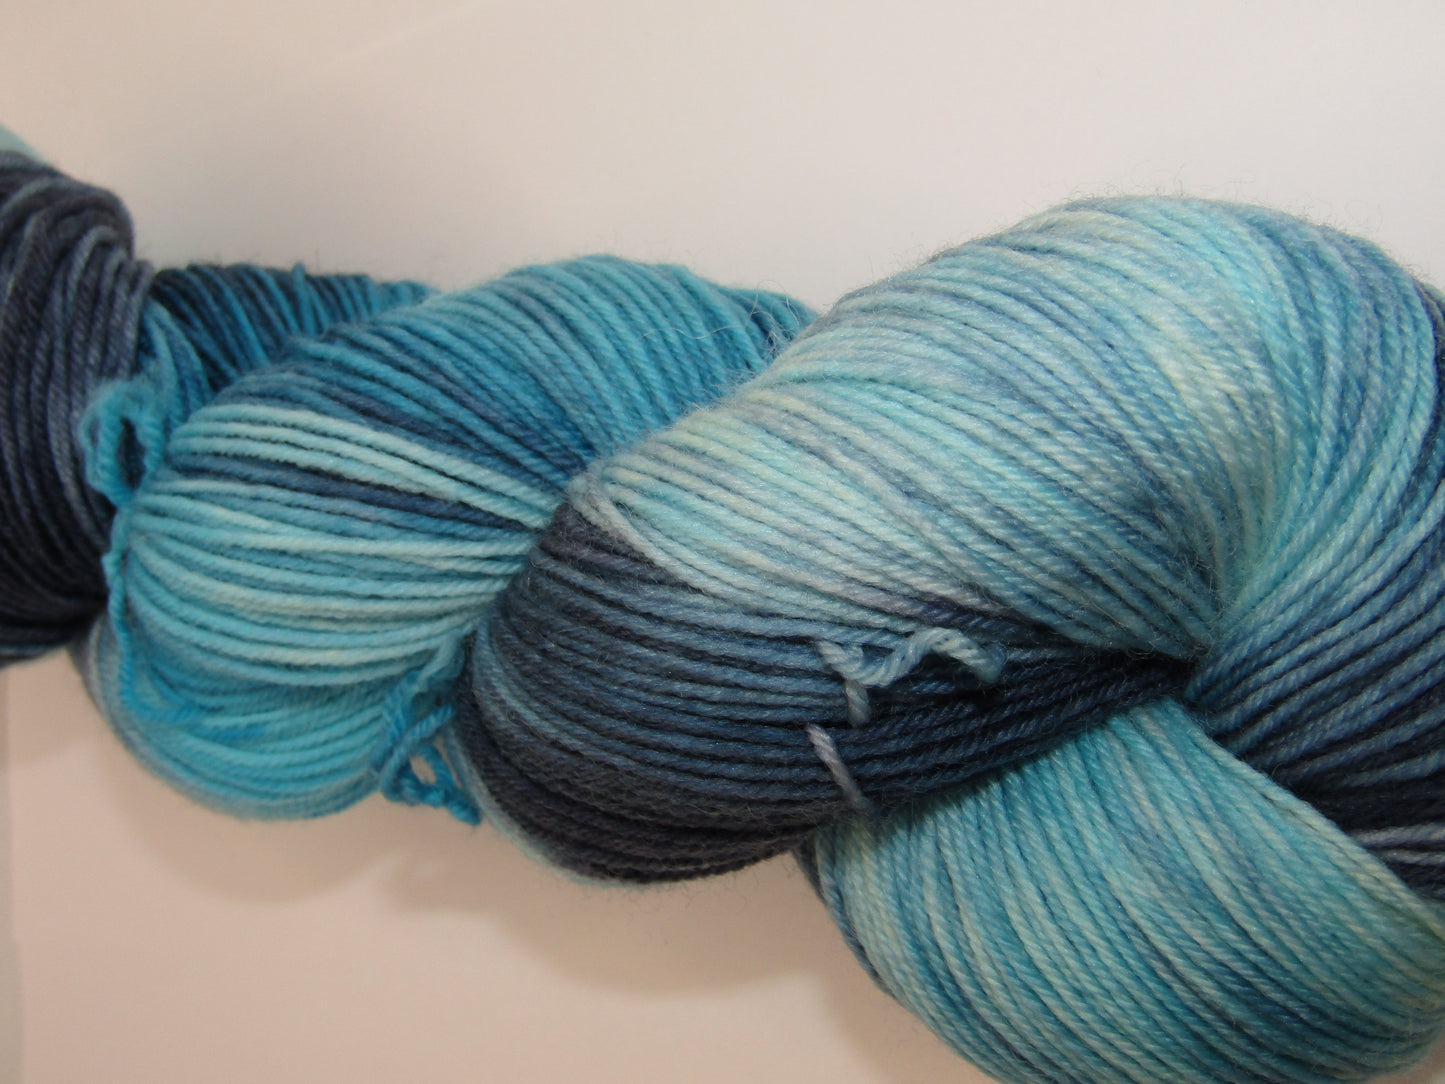 Hand-Dyed Yarn Barnaby Single Skein of yarn in shades of blued steel and aqua.  